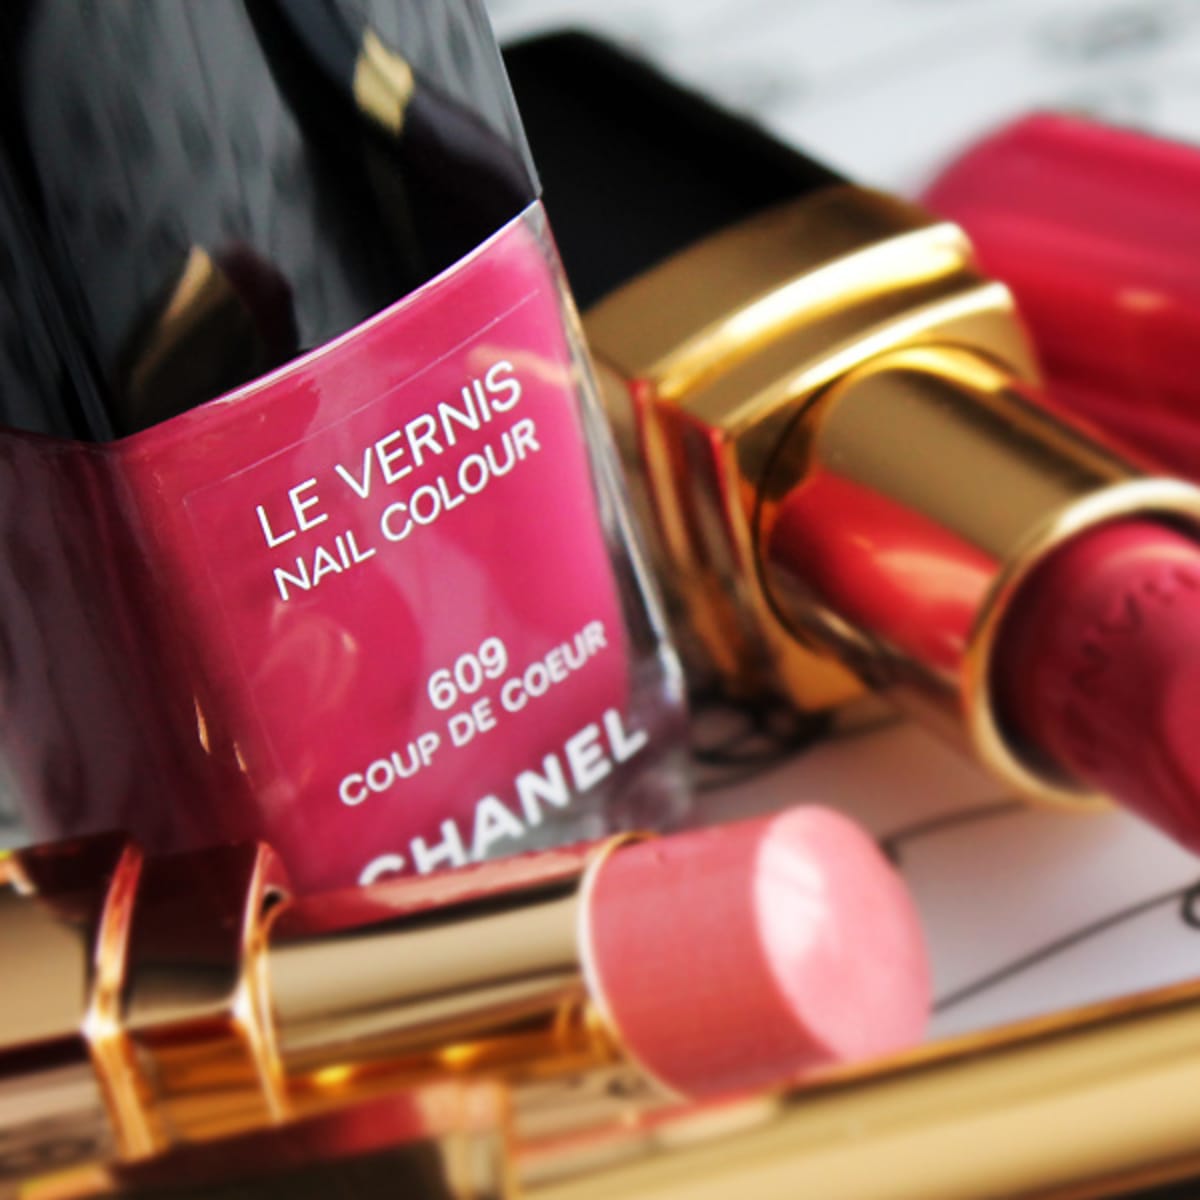 Chanel Coup de Coeur Le Vernis: Swatch - Beautygeeks